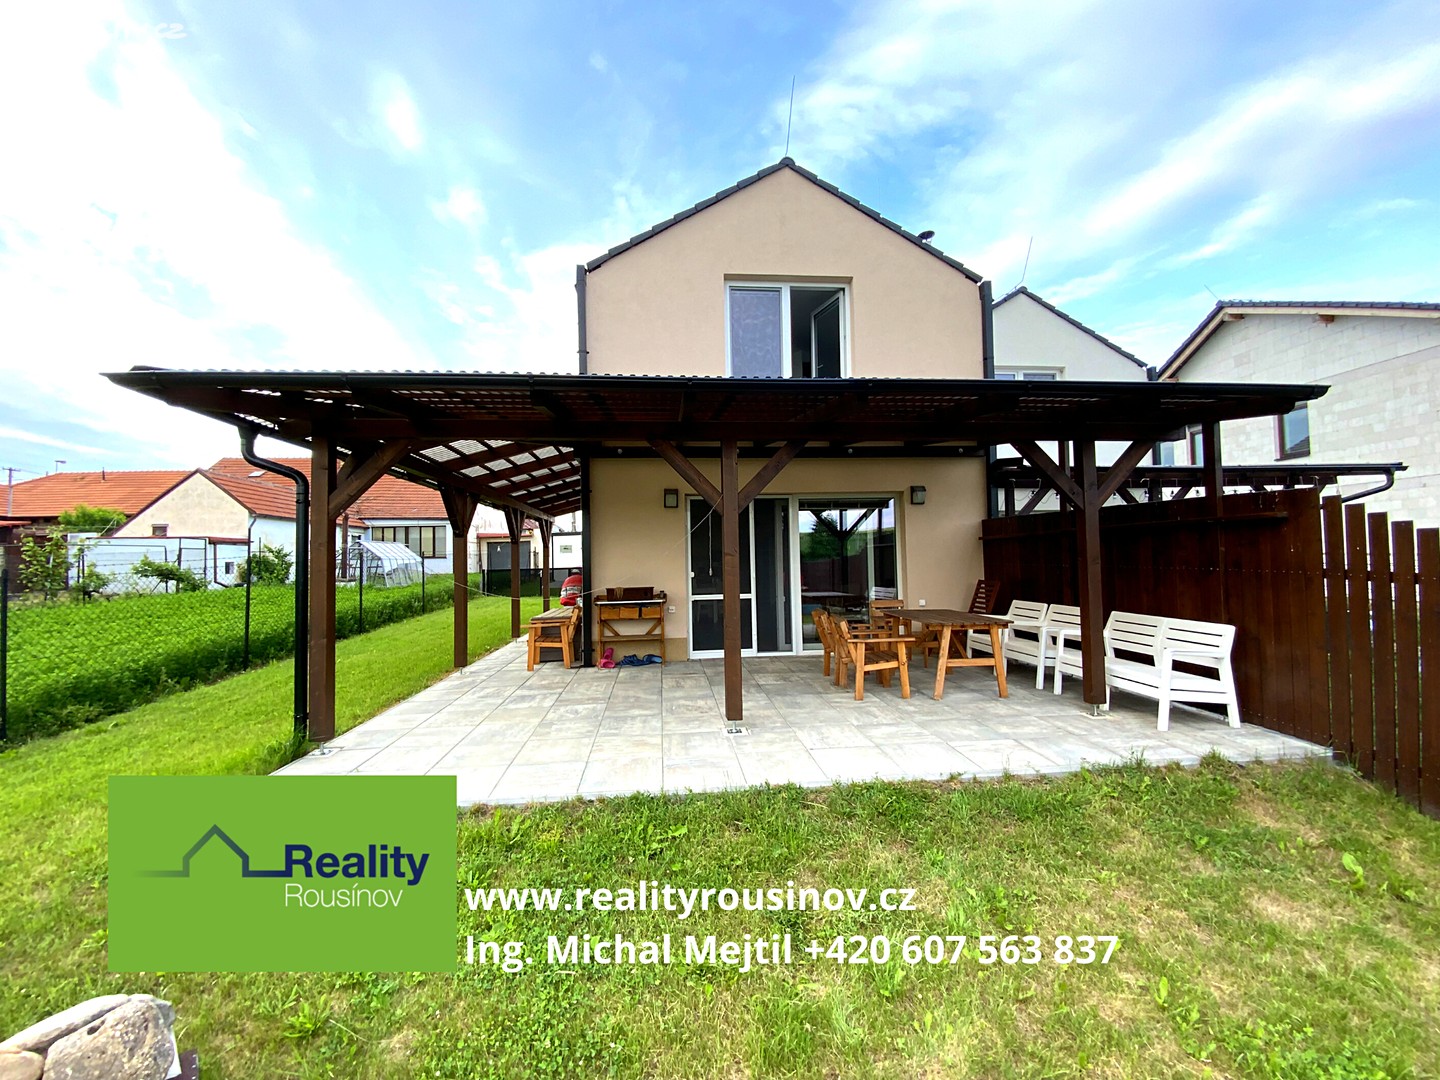 Prodej  rodinného domu 149 m², pozemek 1 130 m², Rousínov - Vítovice, okres Vyškov